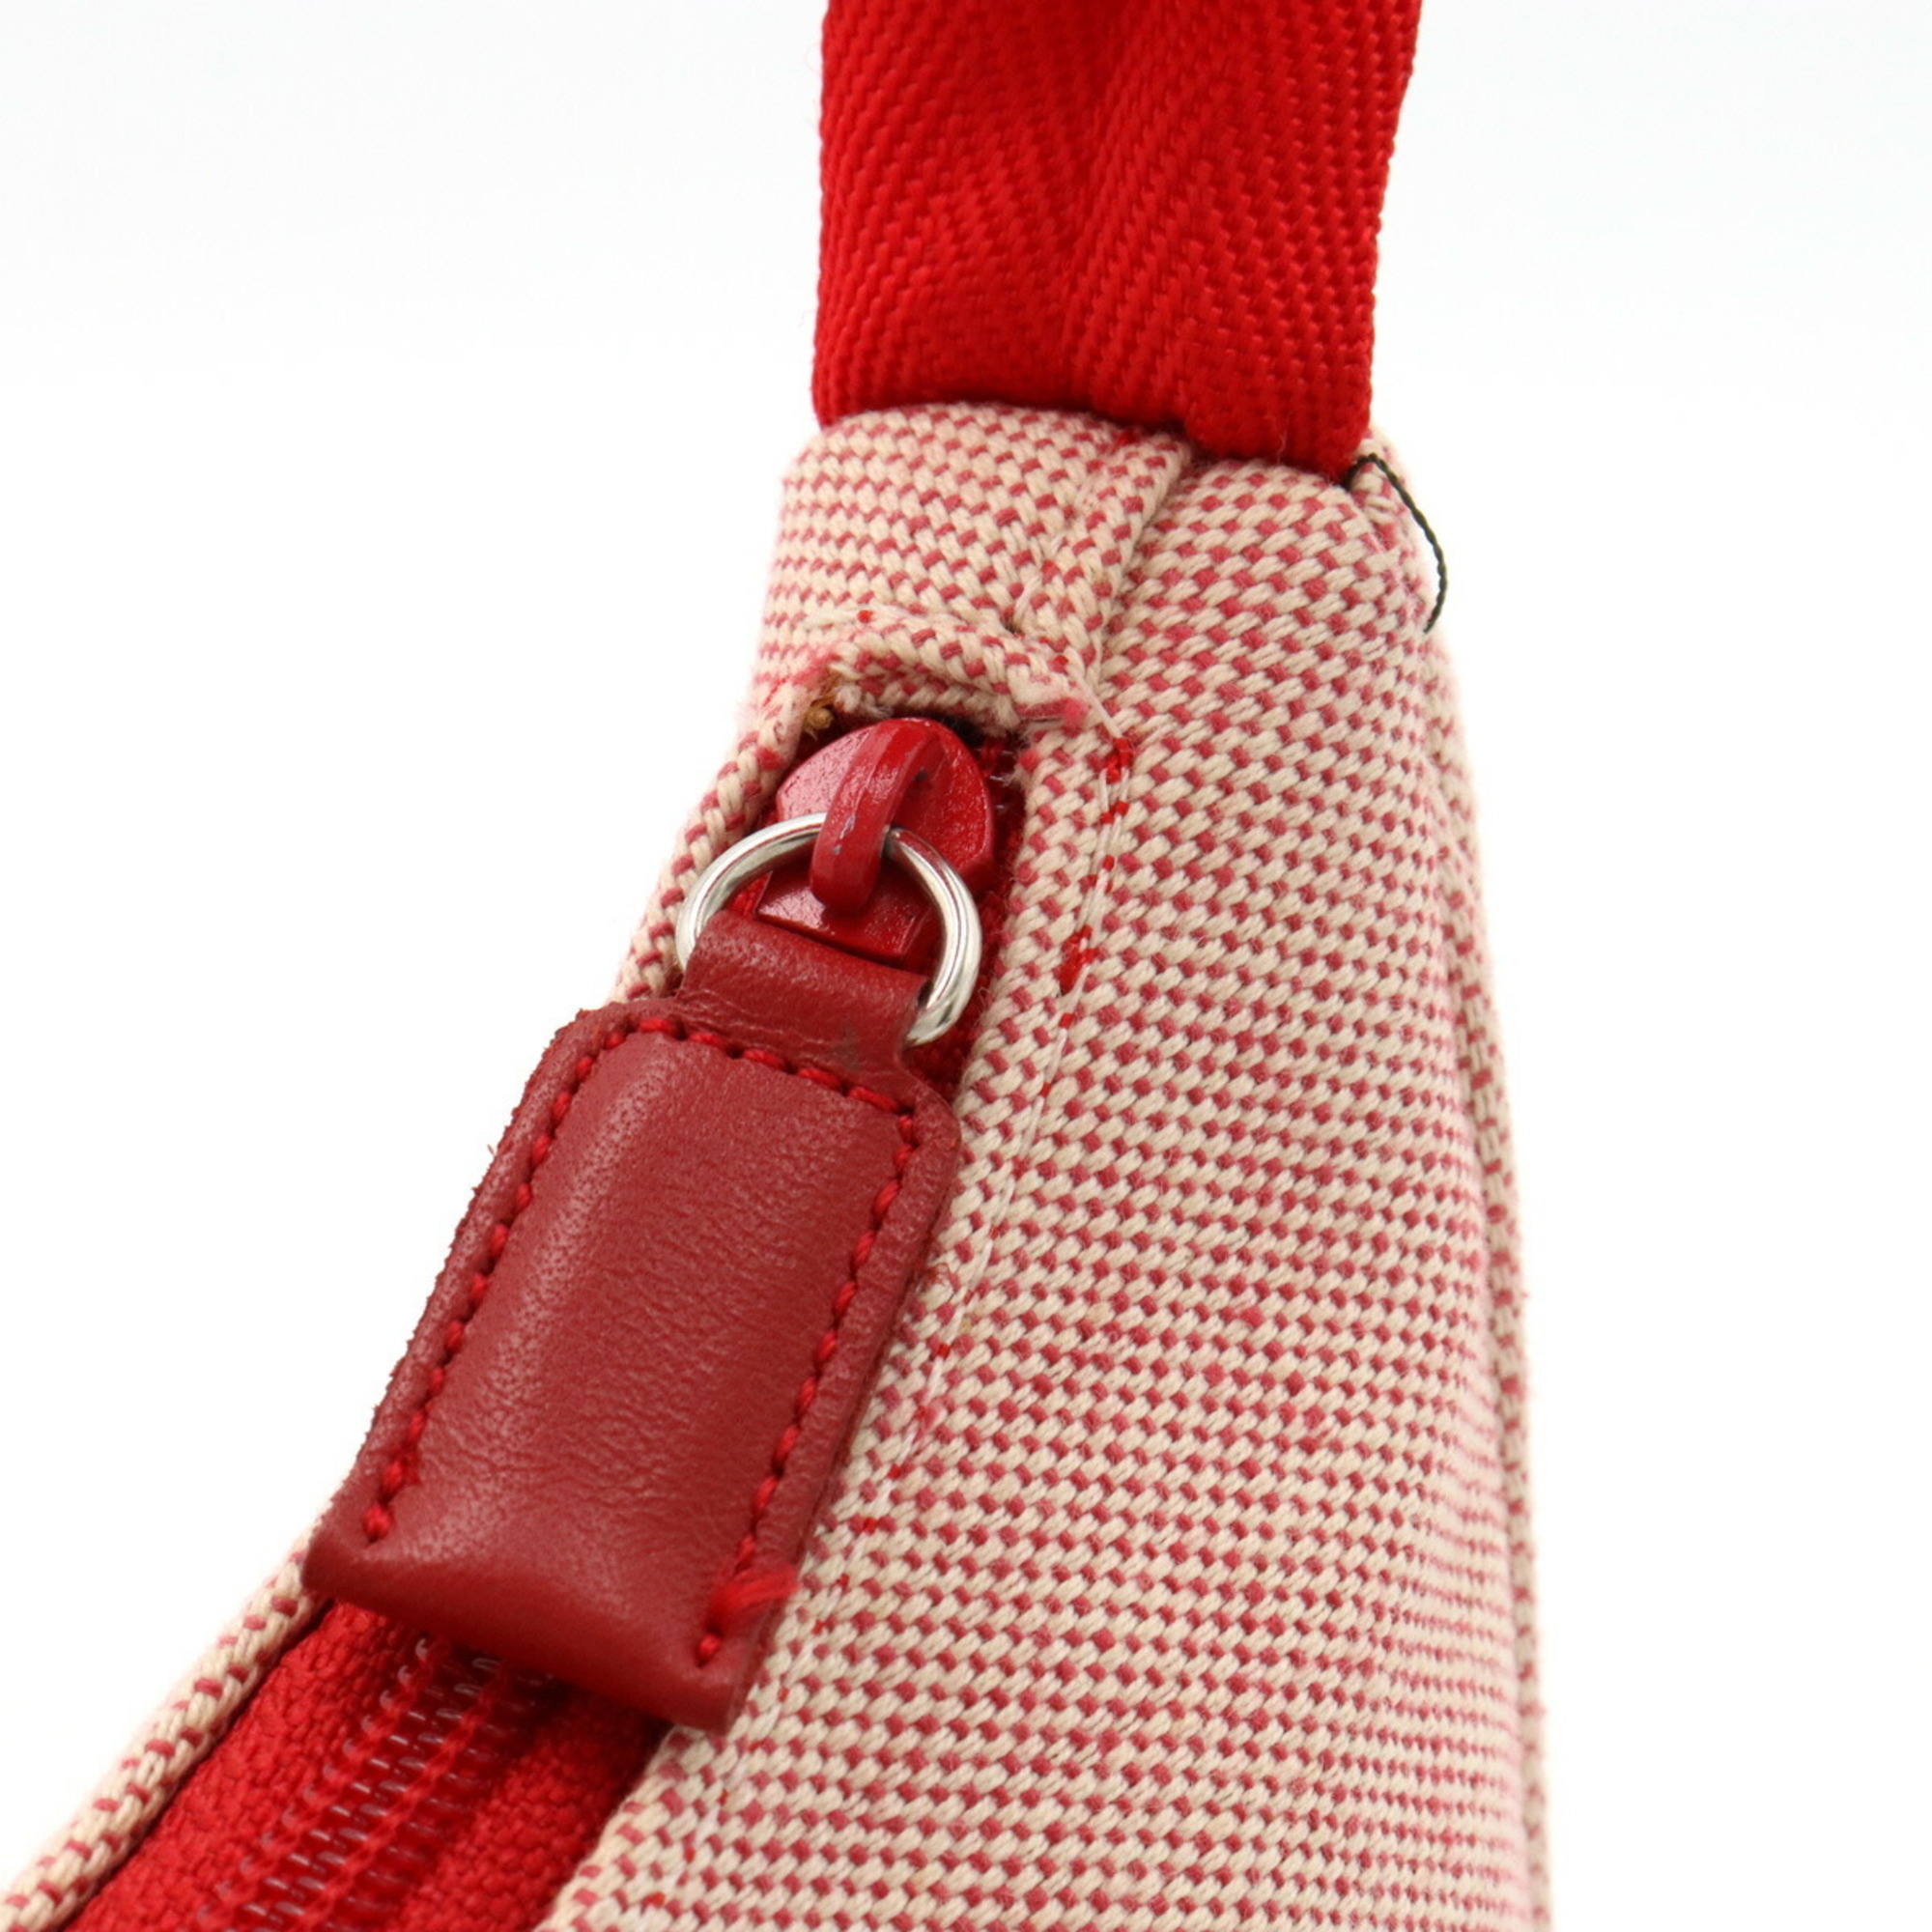 PRADA Prada Sport Pouch Handbag Canvas Nylon Red Beige MV515